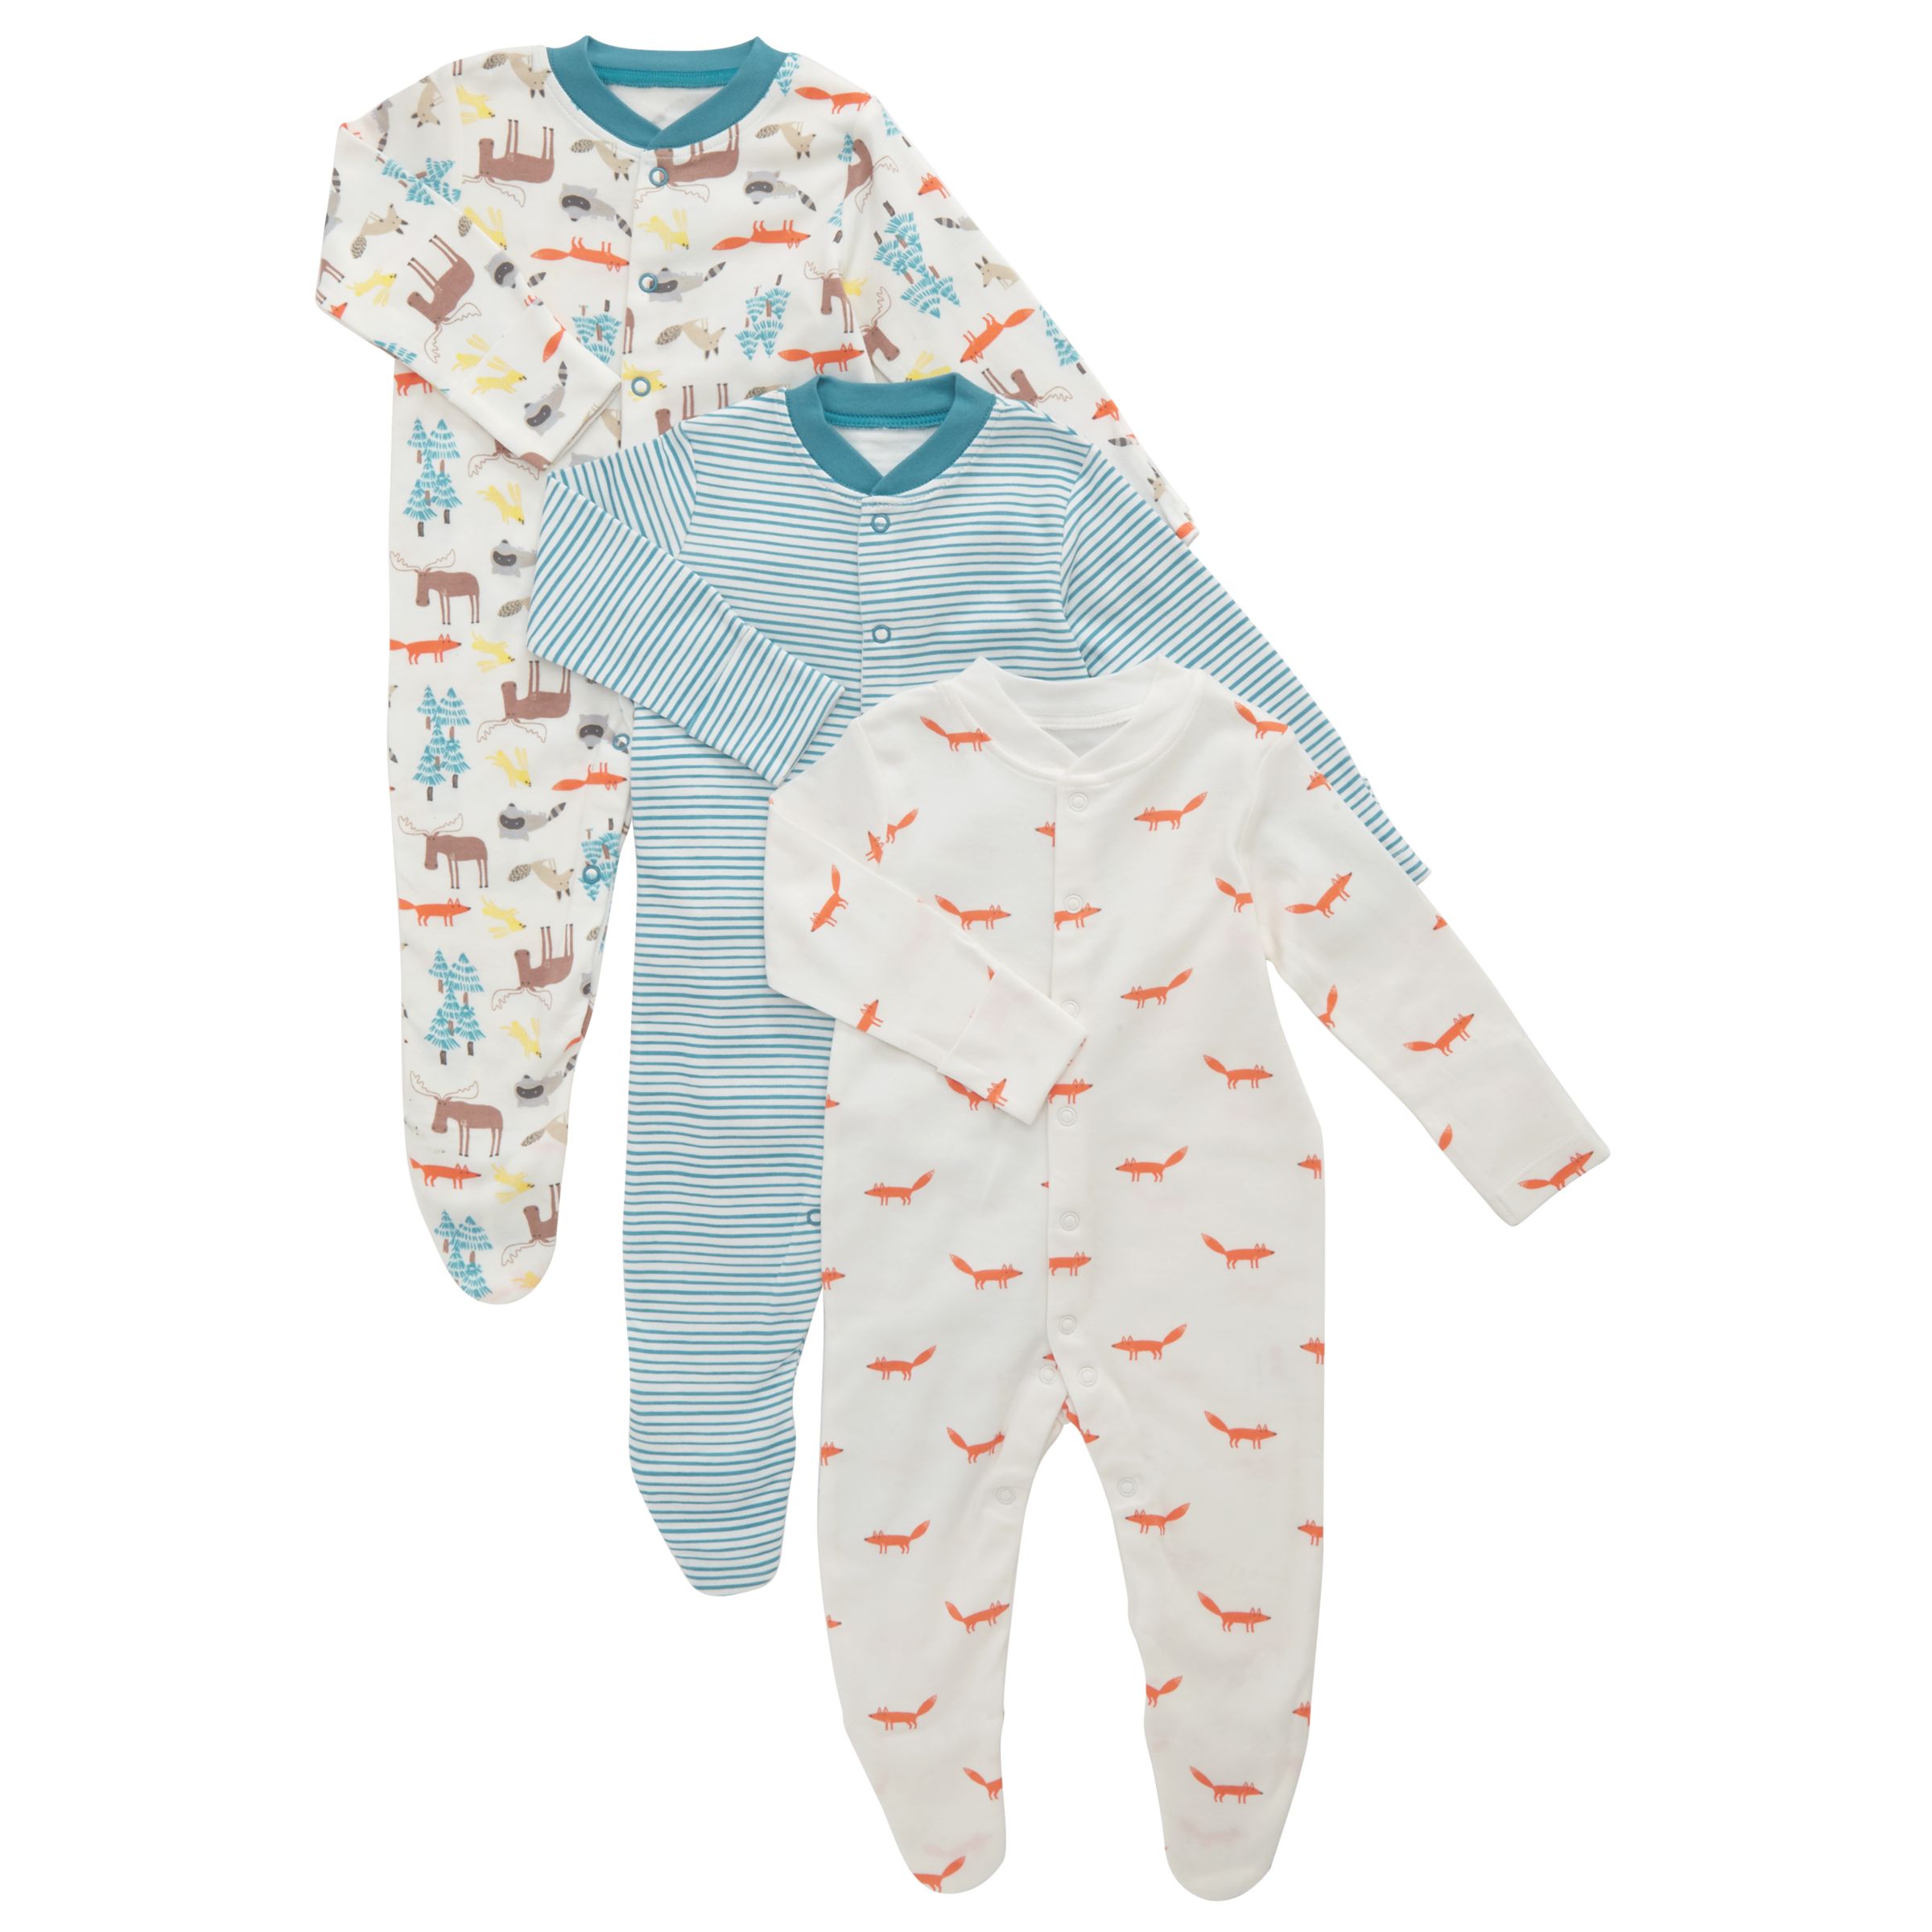 baby sleepsuits multipack sale